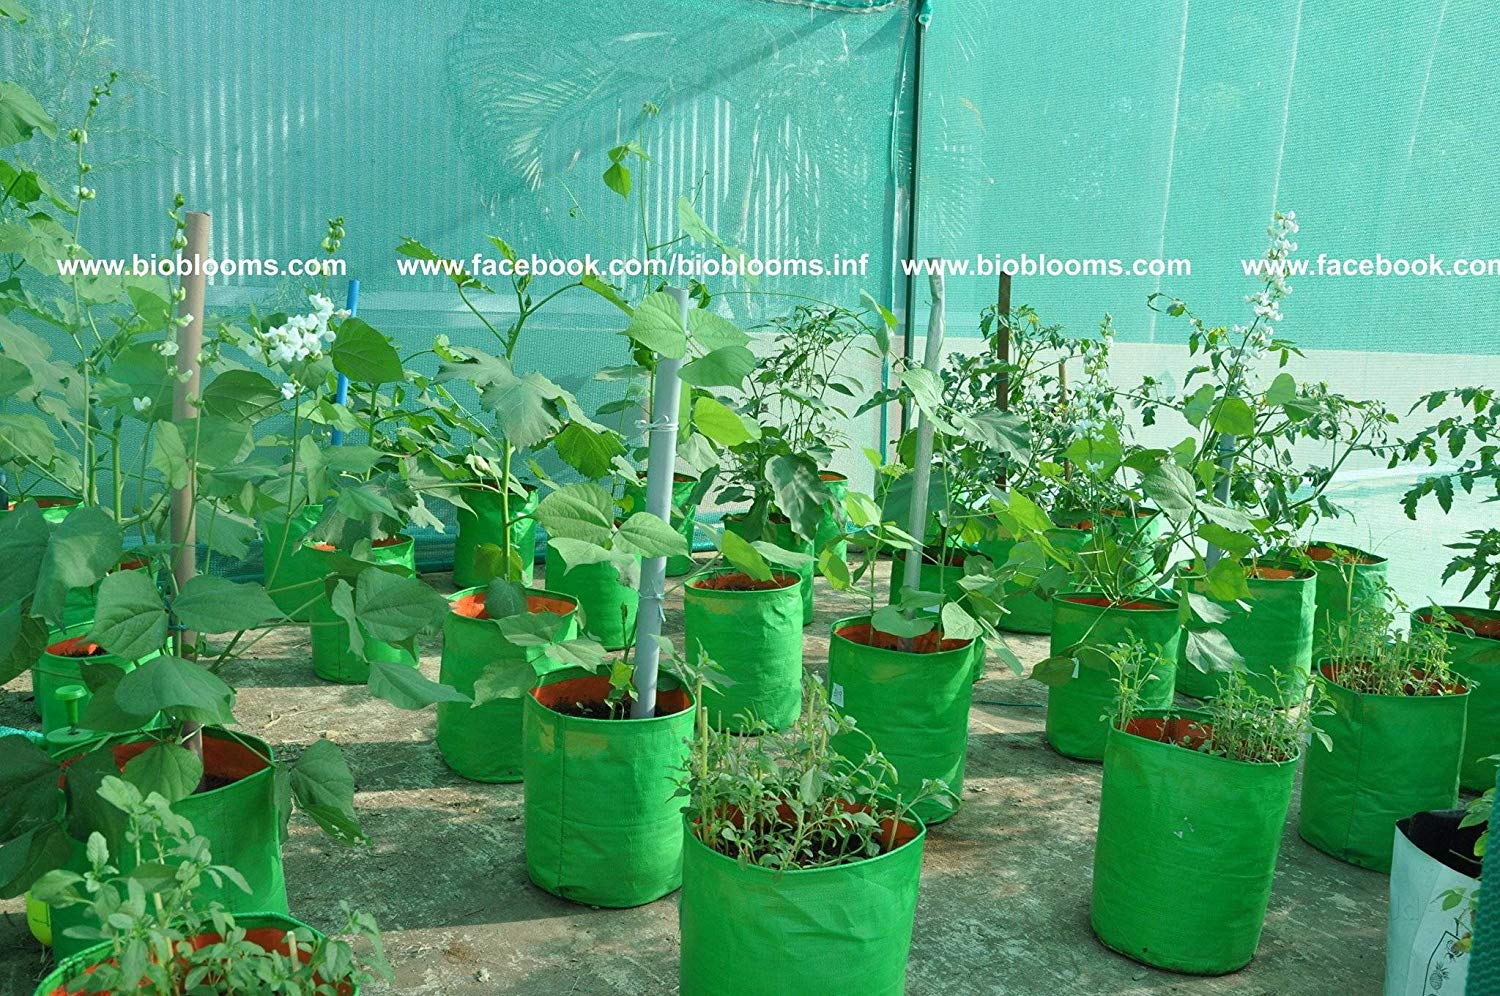 Terrace Garden Vegetable Growing kit. vege Grow Bags - 20 pcs, Spinach Grow Bags- 10pcs, shadenet 10 x10 feet, 10 Seed Packs